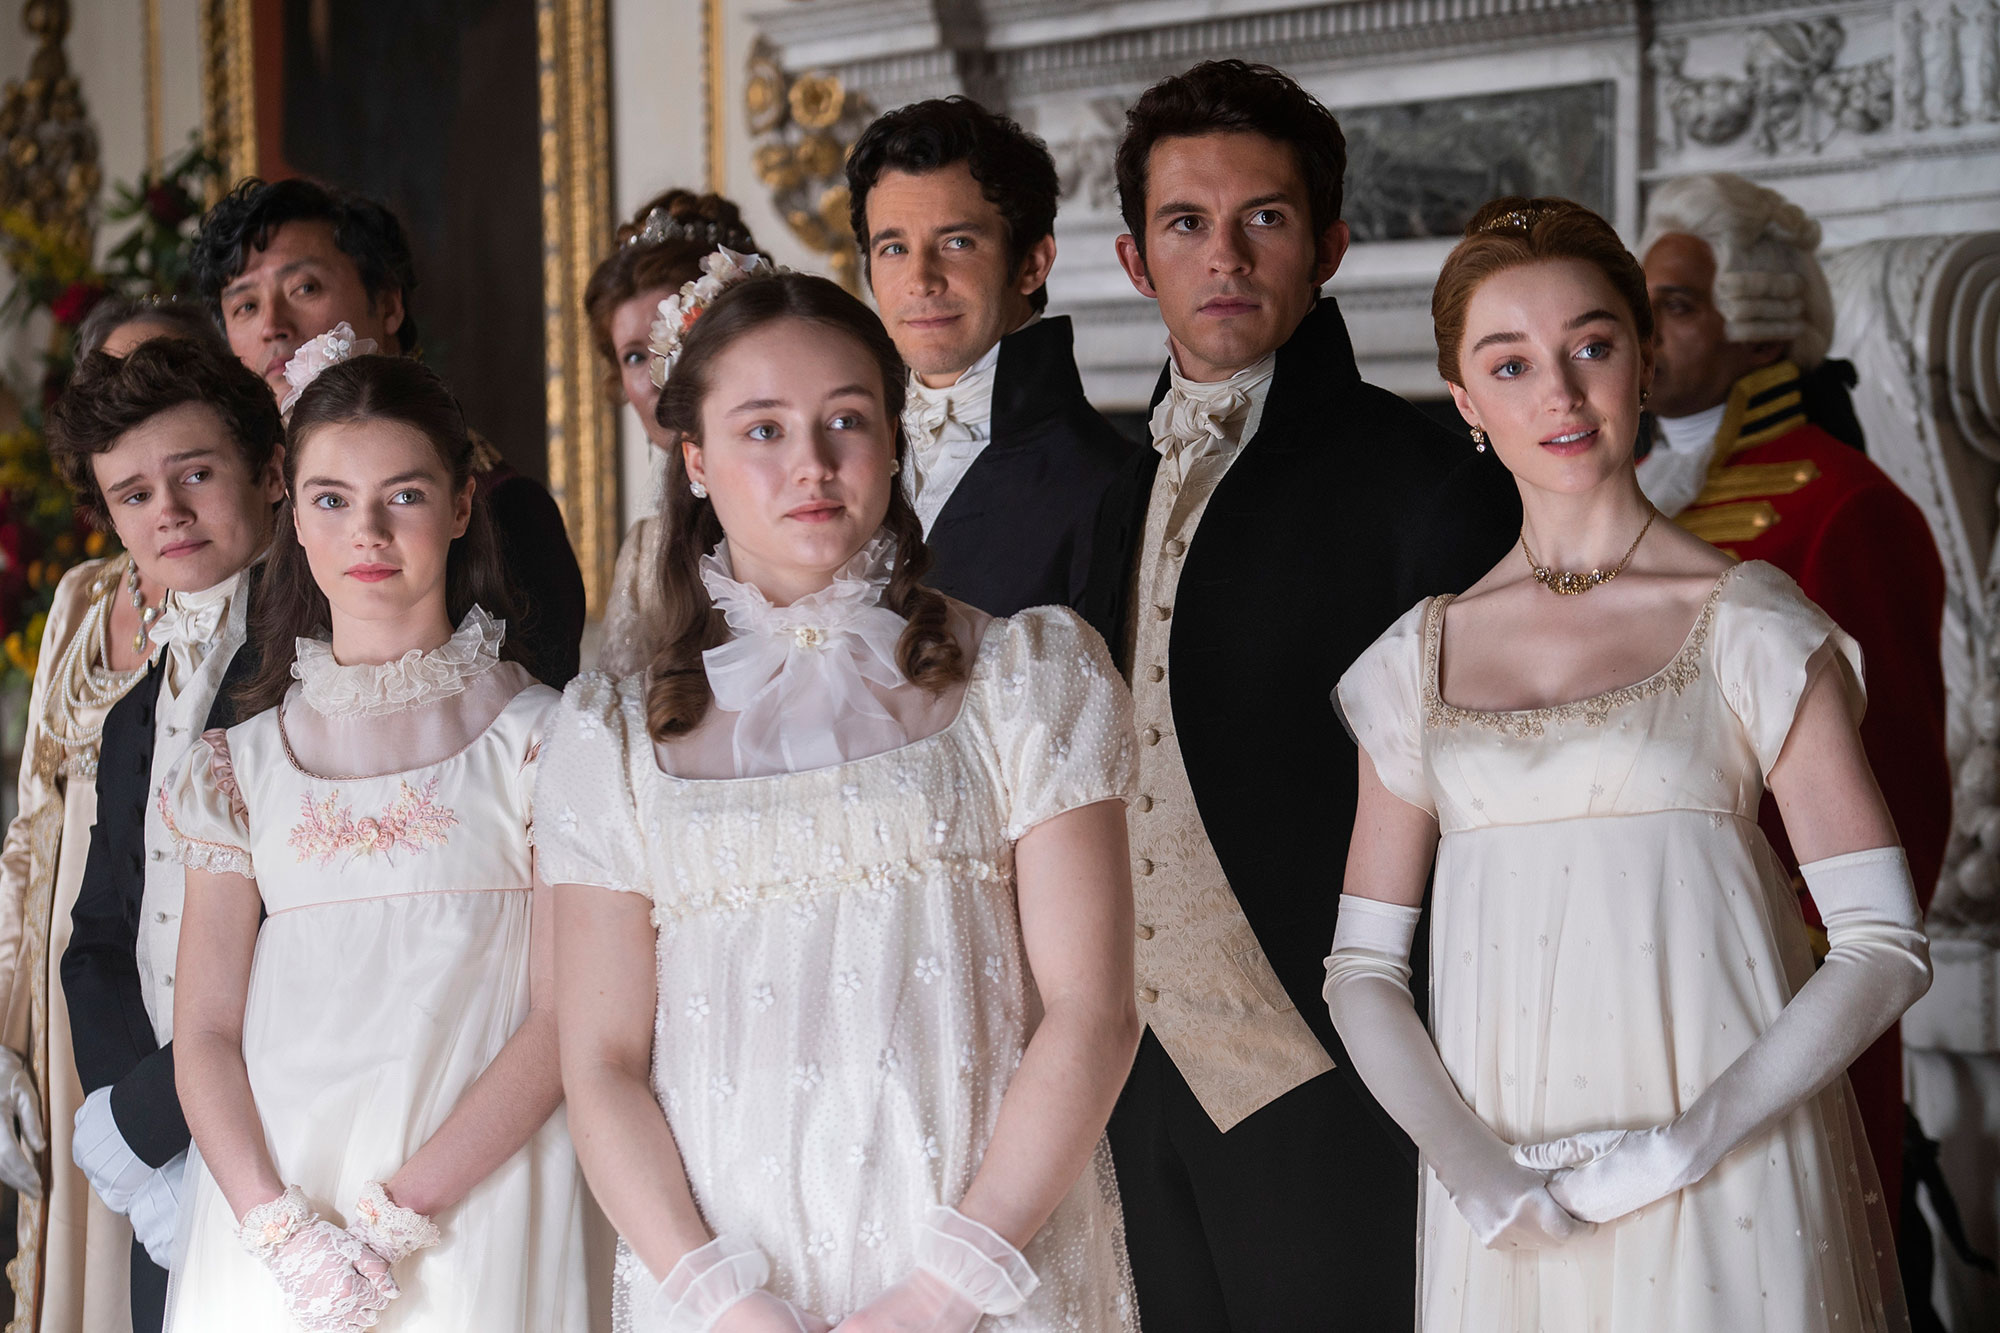 Bridgerton' Season 2 Is Netflix's Third-Most Popular English Series